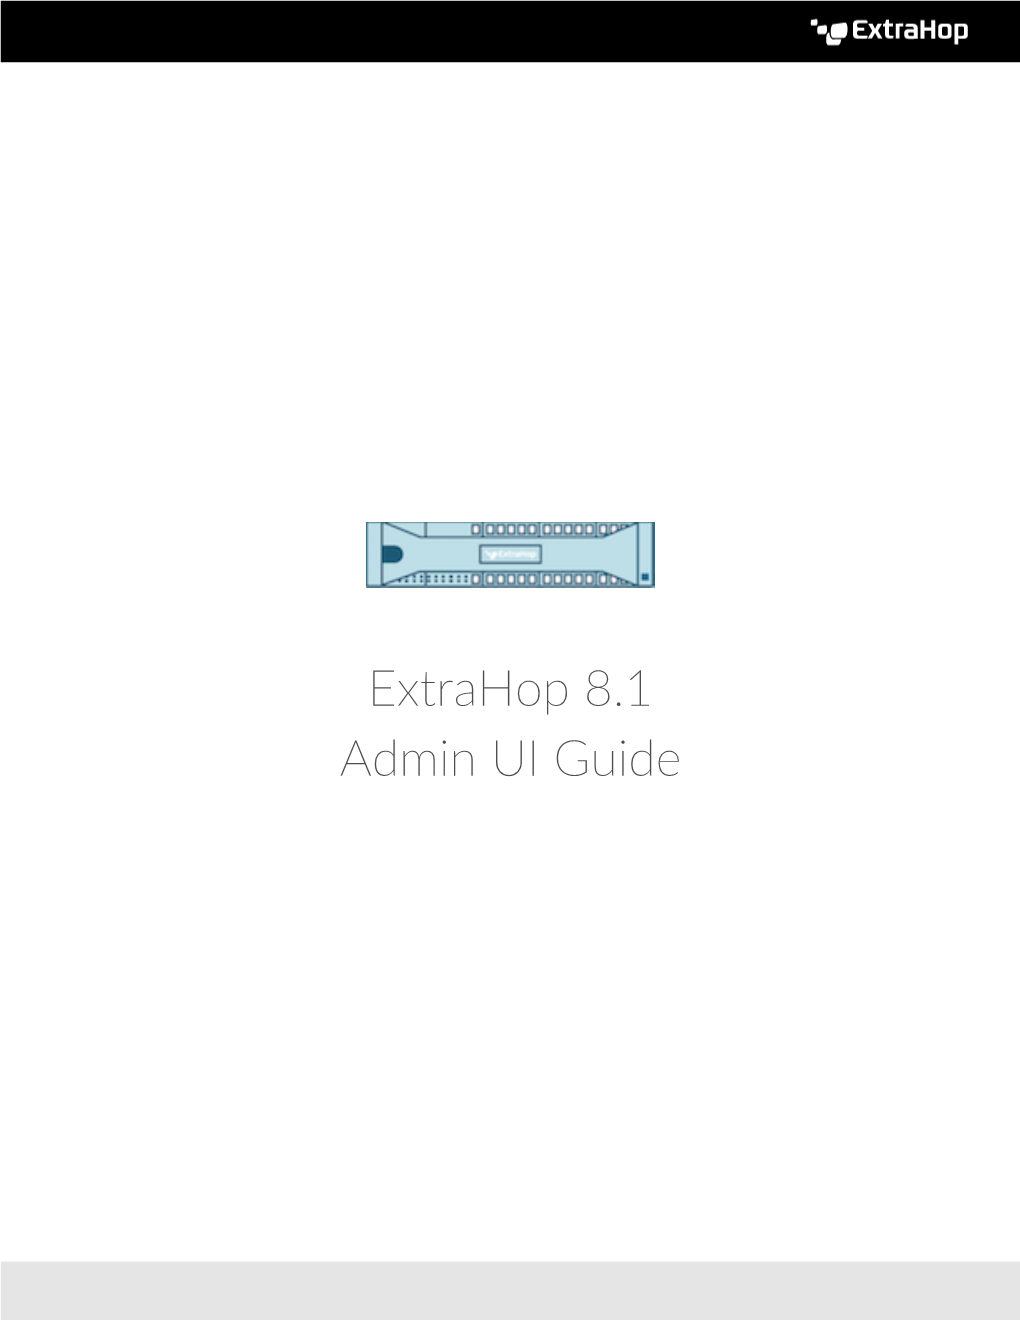 Extrahop 8.1 Admin UI Guide © 2020 Extrahop Networks, Inc